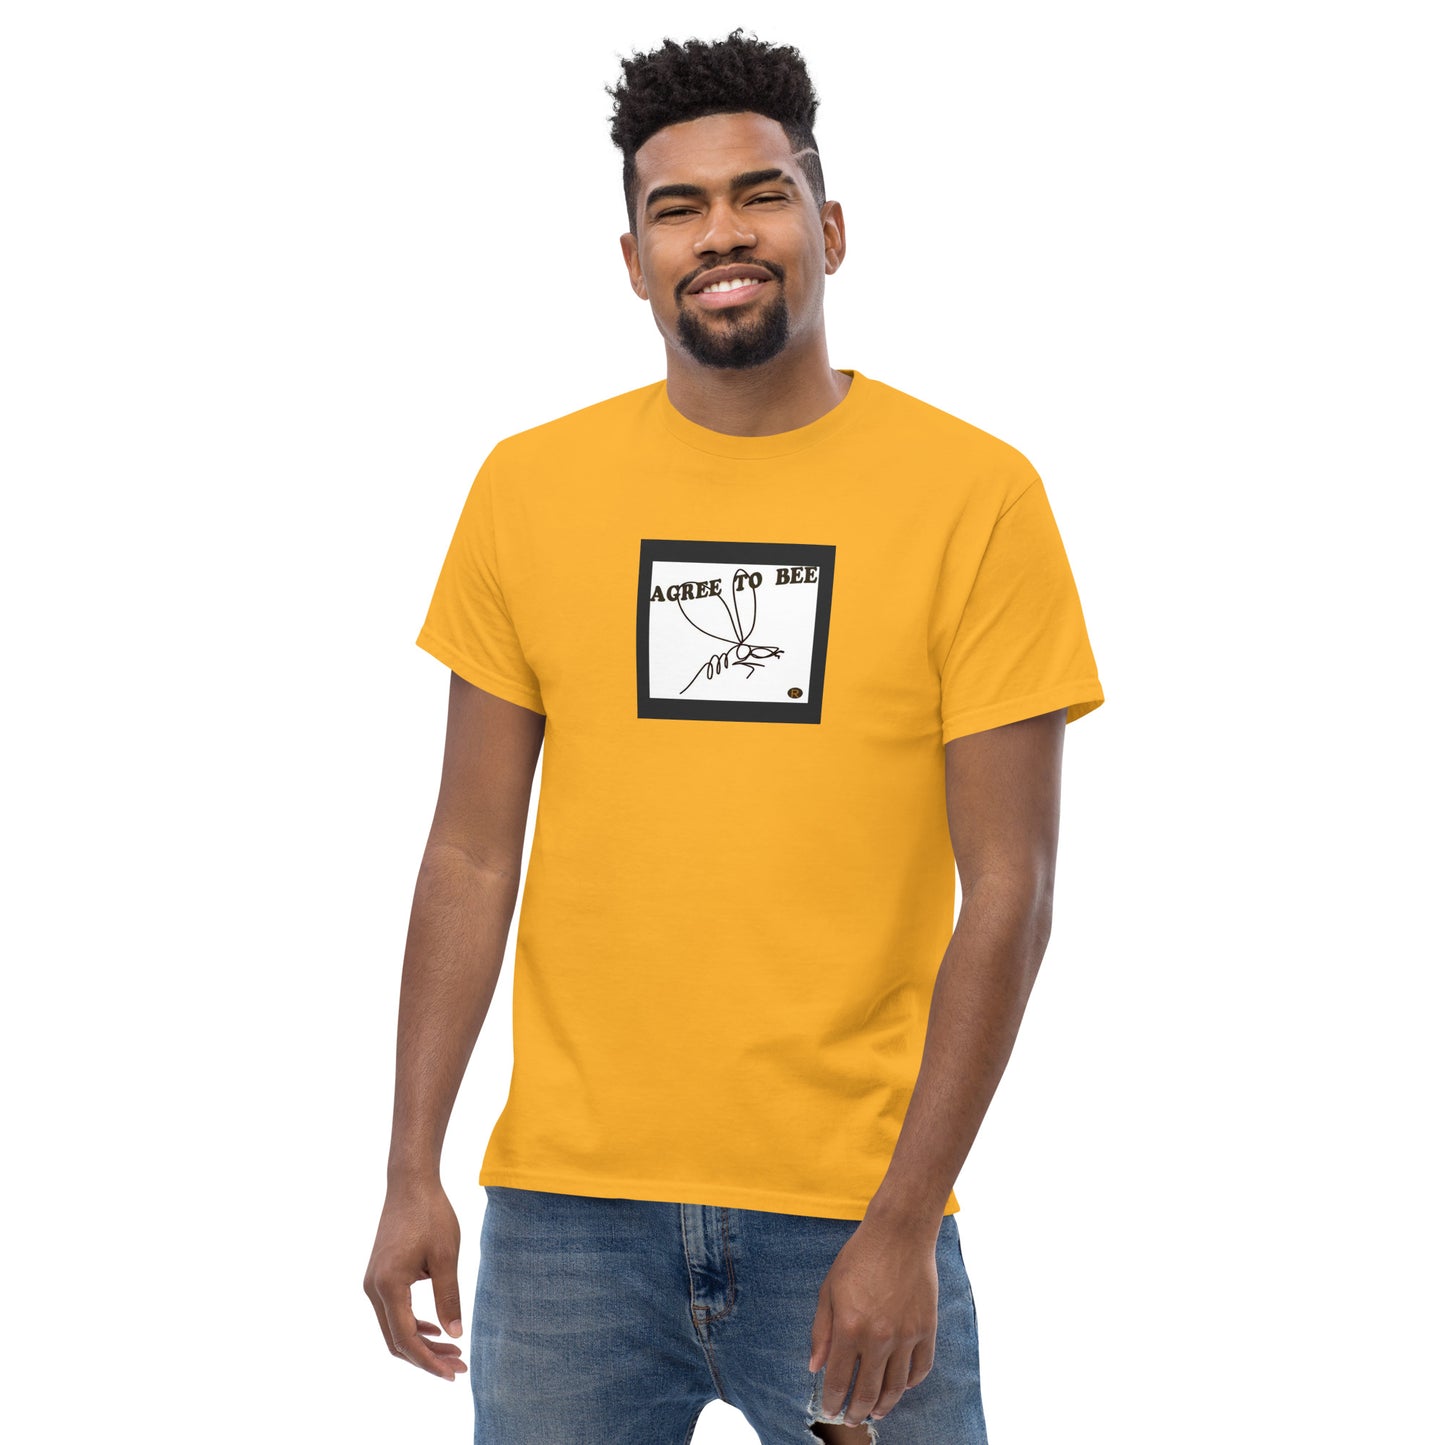 UniquelyForU Agree To Bee Men's T-Shirt Classic